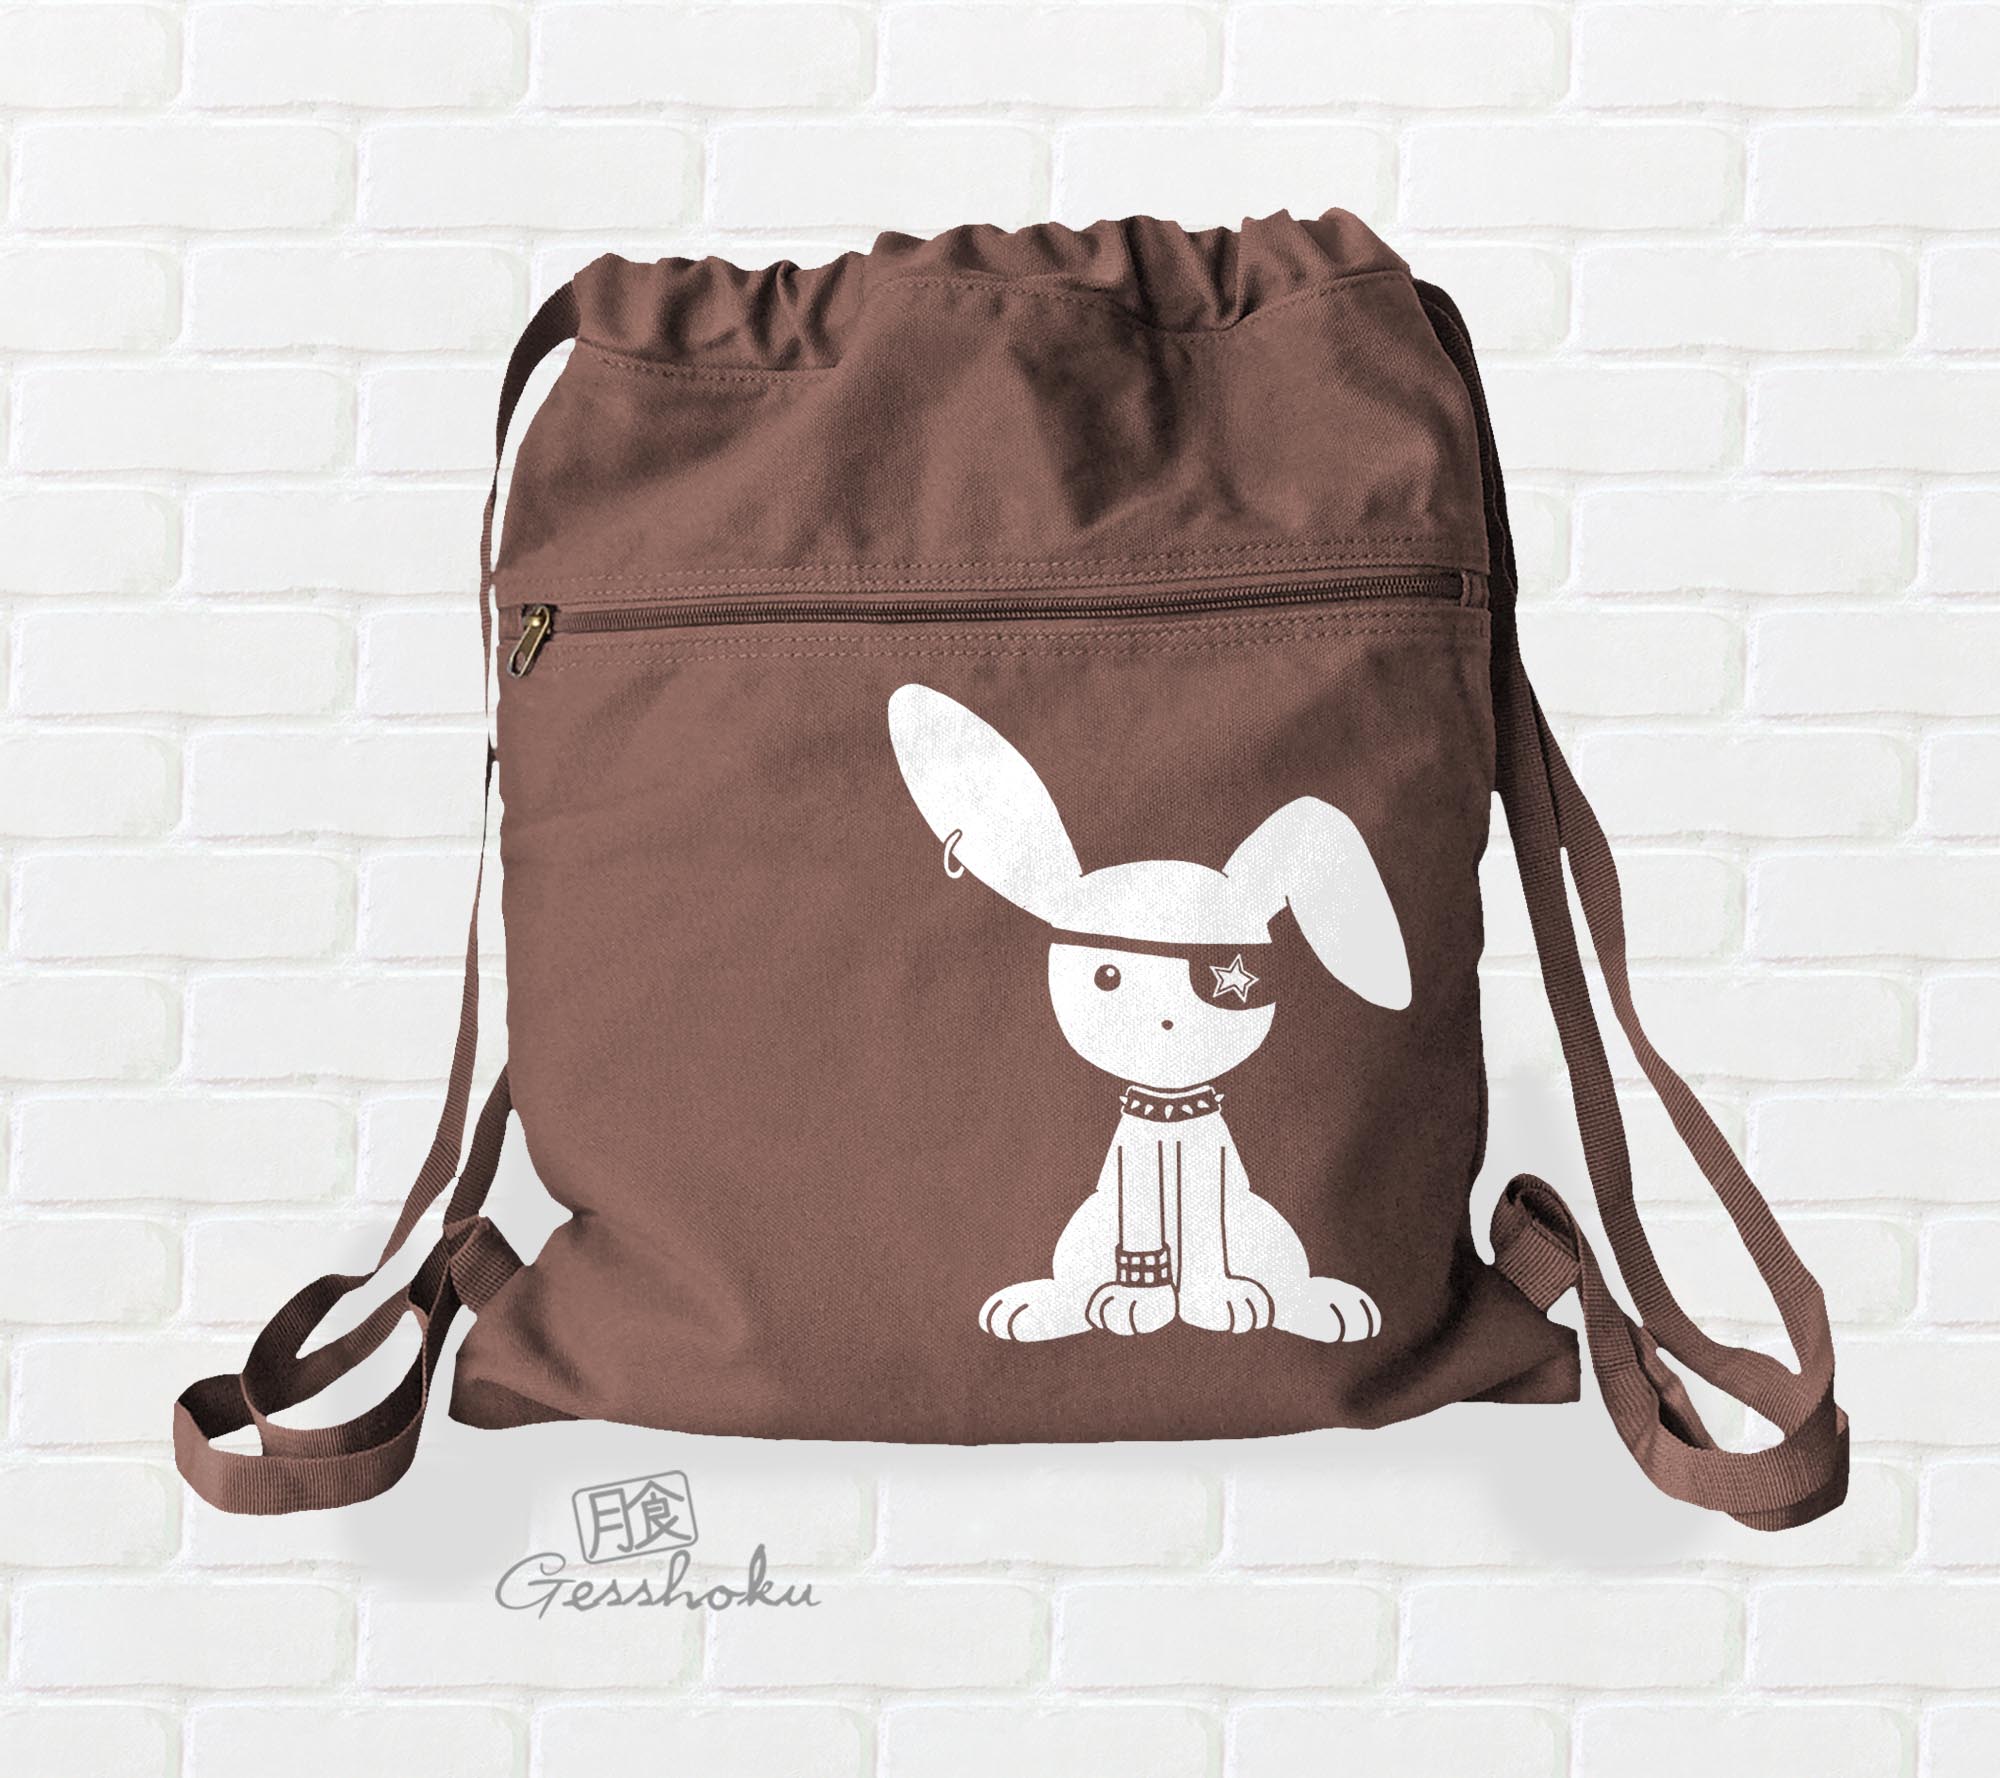 Jrock Bunny Cinch Backpack - Brown